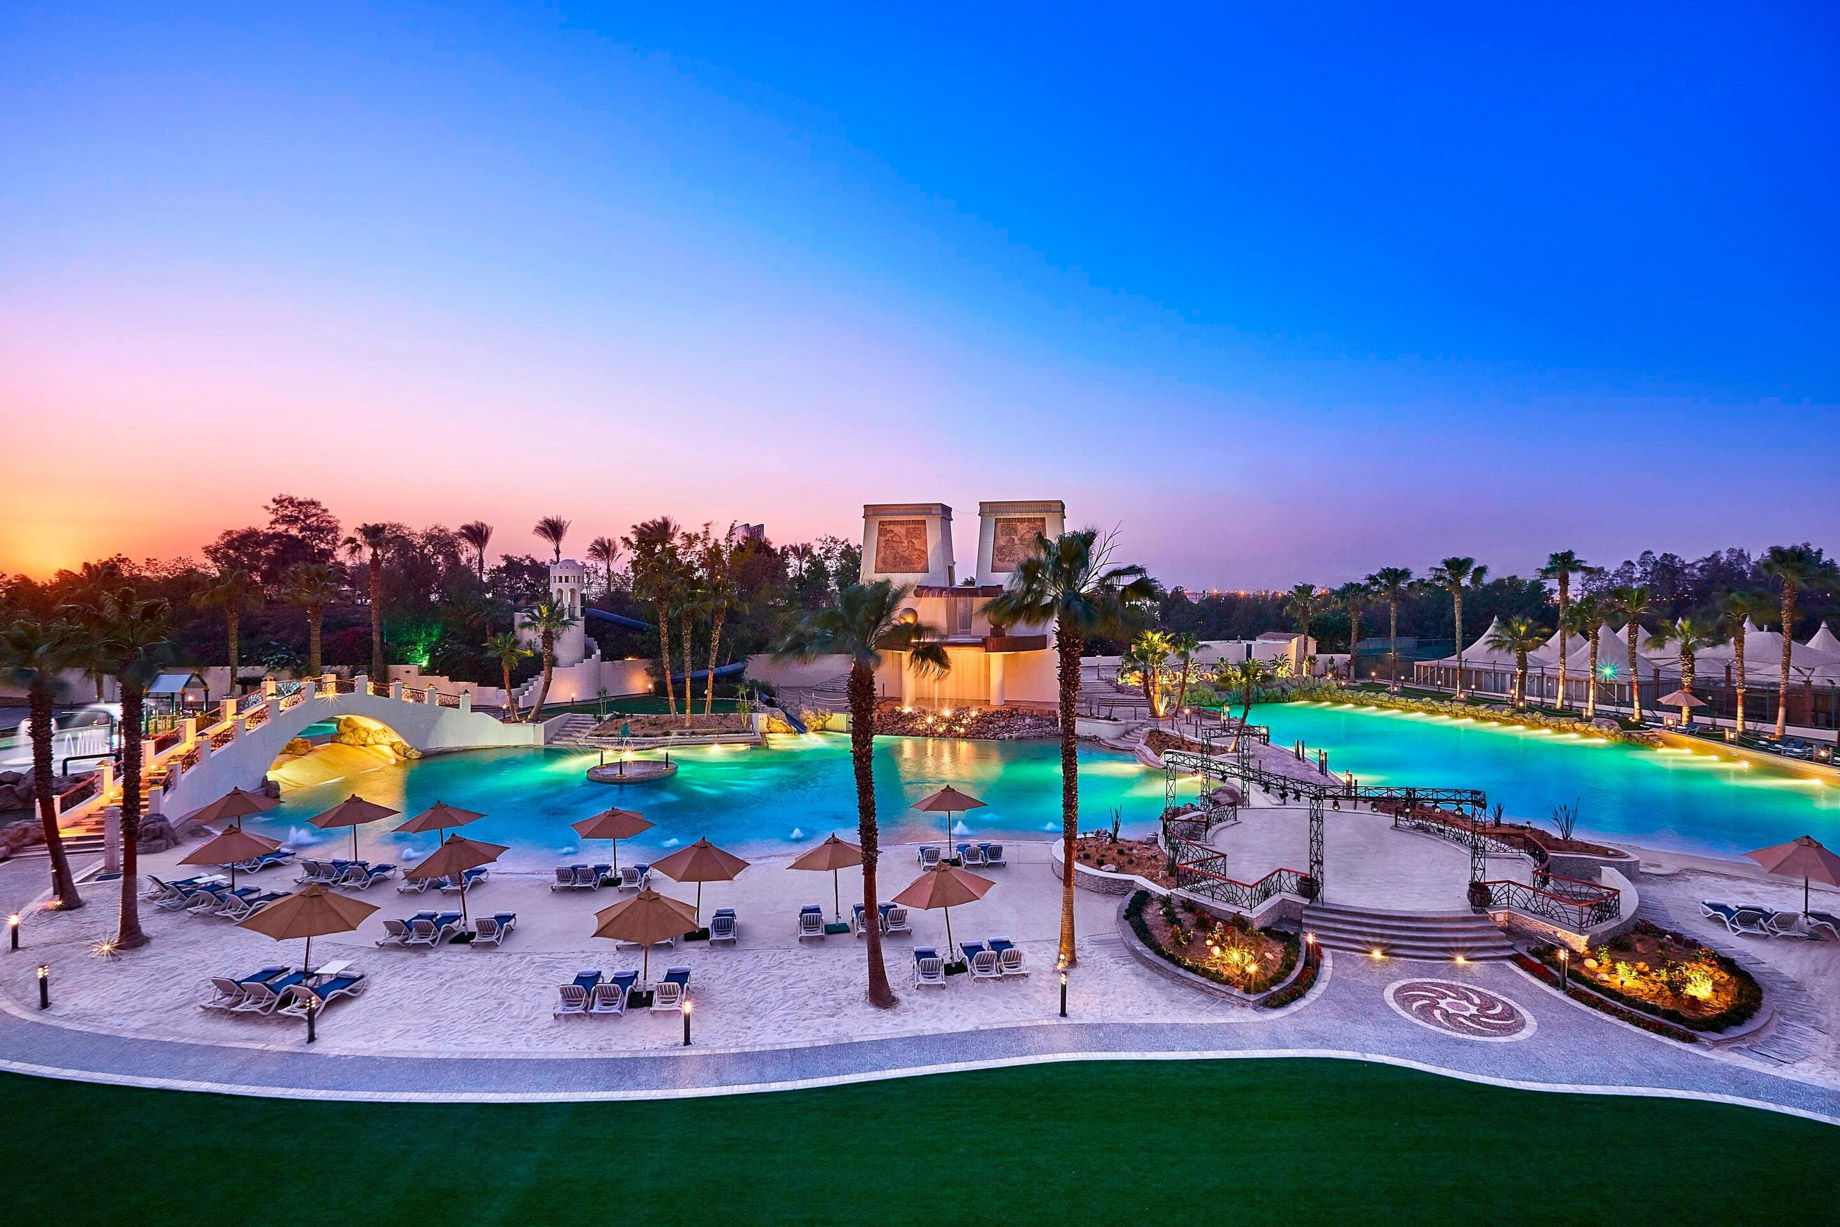 JW Marriott Hotel Cairo - Cairo, Egypt - The Beach Water Park Sunset